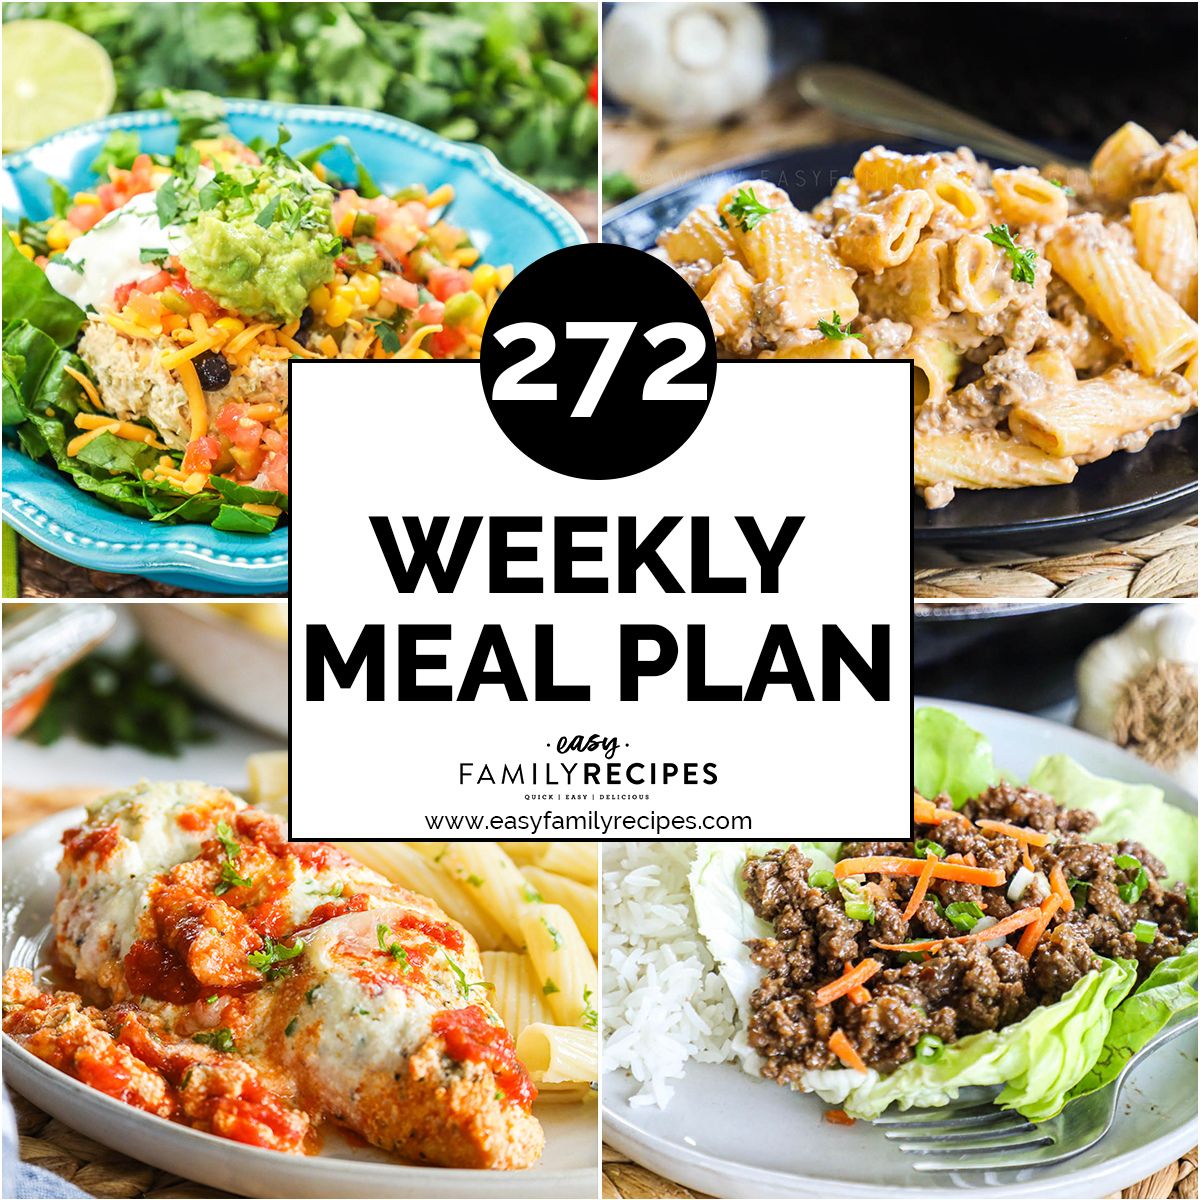 Weekly Meal Plan 272